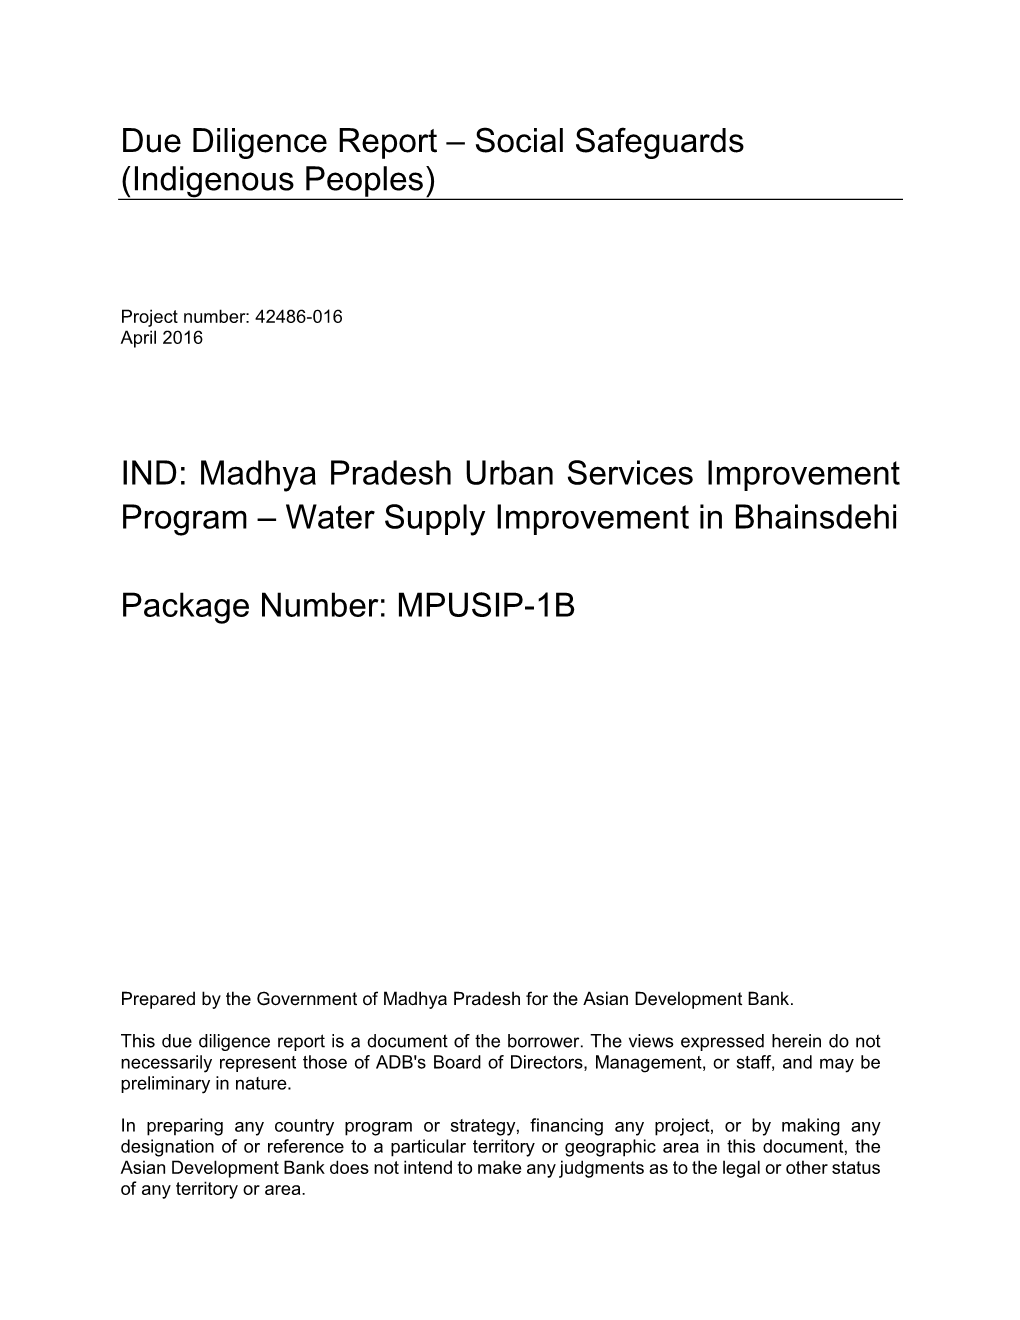 42486-016: Madhya Pradesh Urban Services Improvement Project